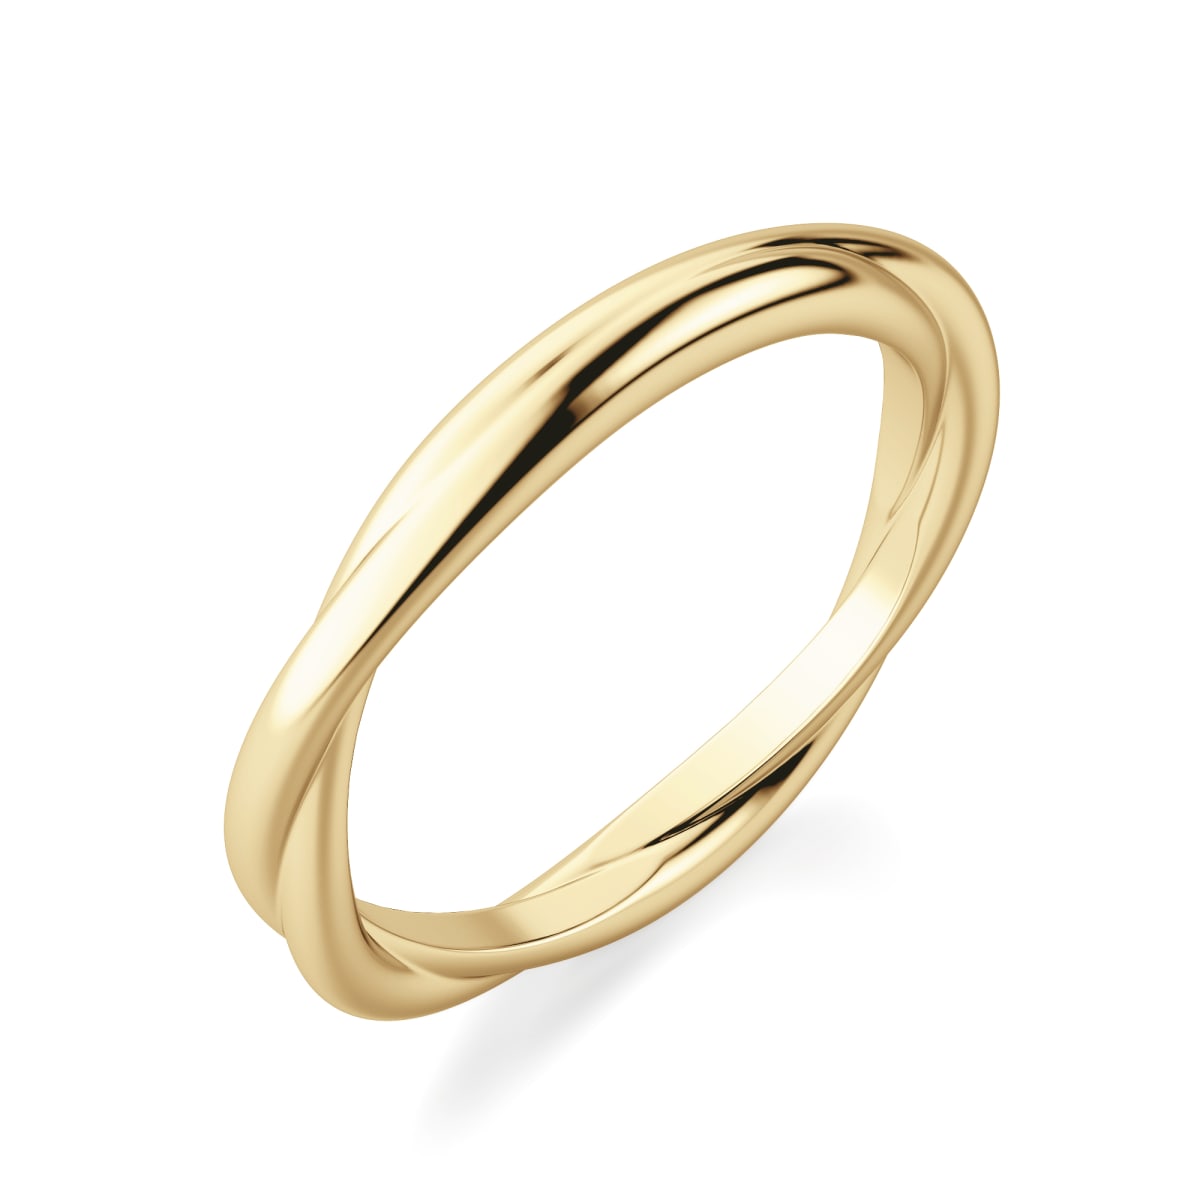 Braided Wedding Band, Ring Size 7.5, 14K Yellow Gold